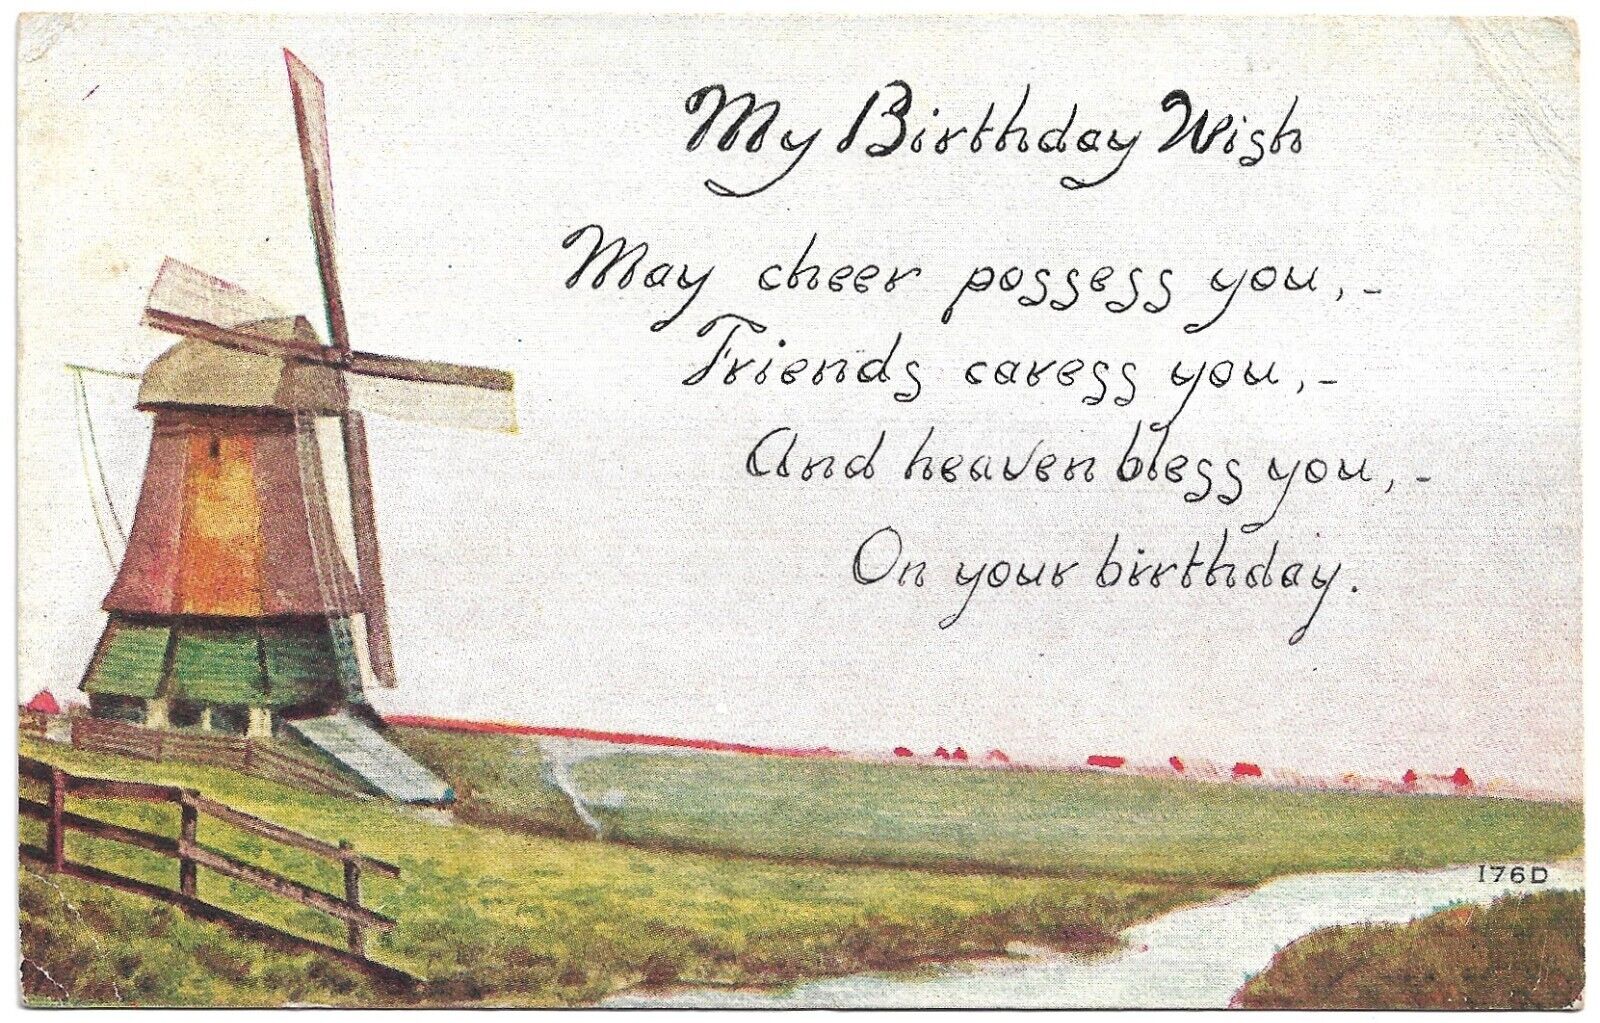 Windmill in Field by Creek Birthday Wish Poem Vintage Postcard